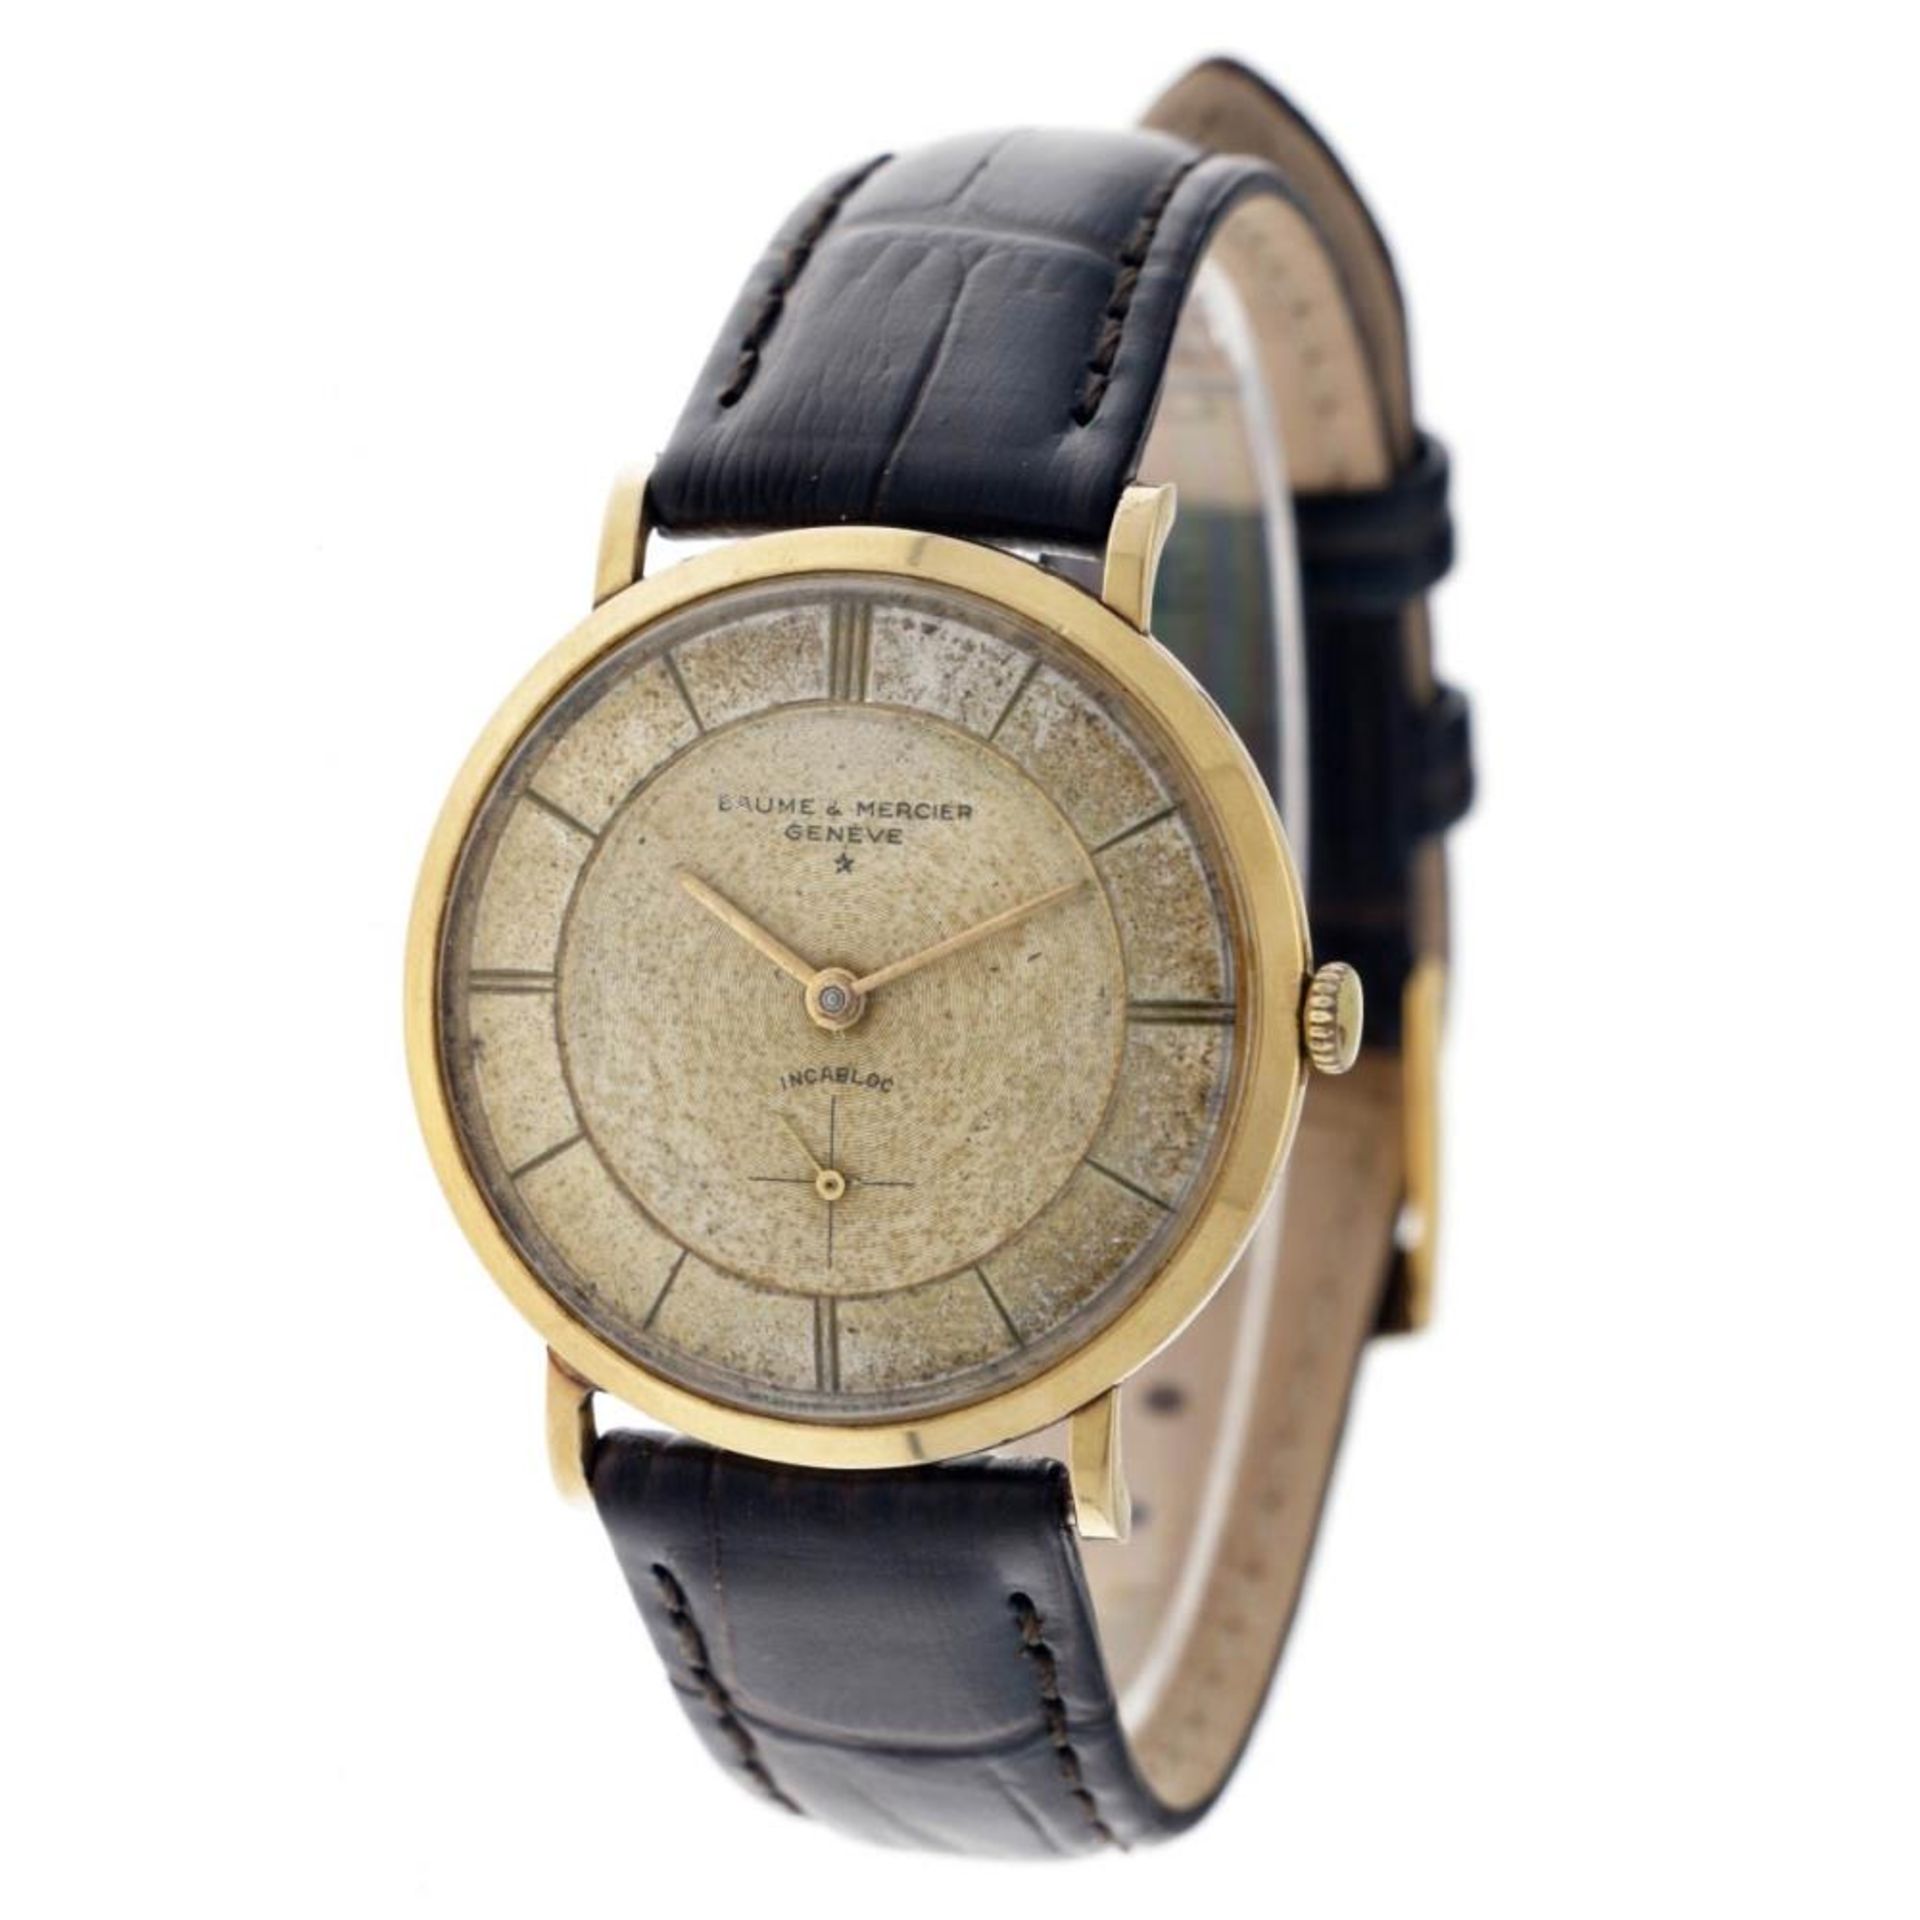 Baume & Mercier vintage 3568 - Men's watch - approx. 1950. - Image 4 of 12